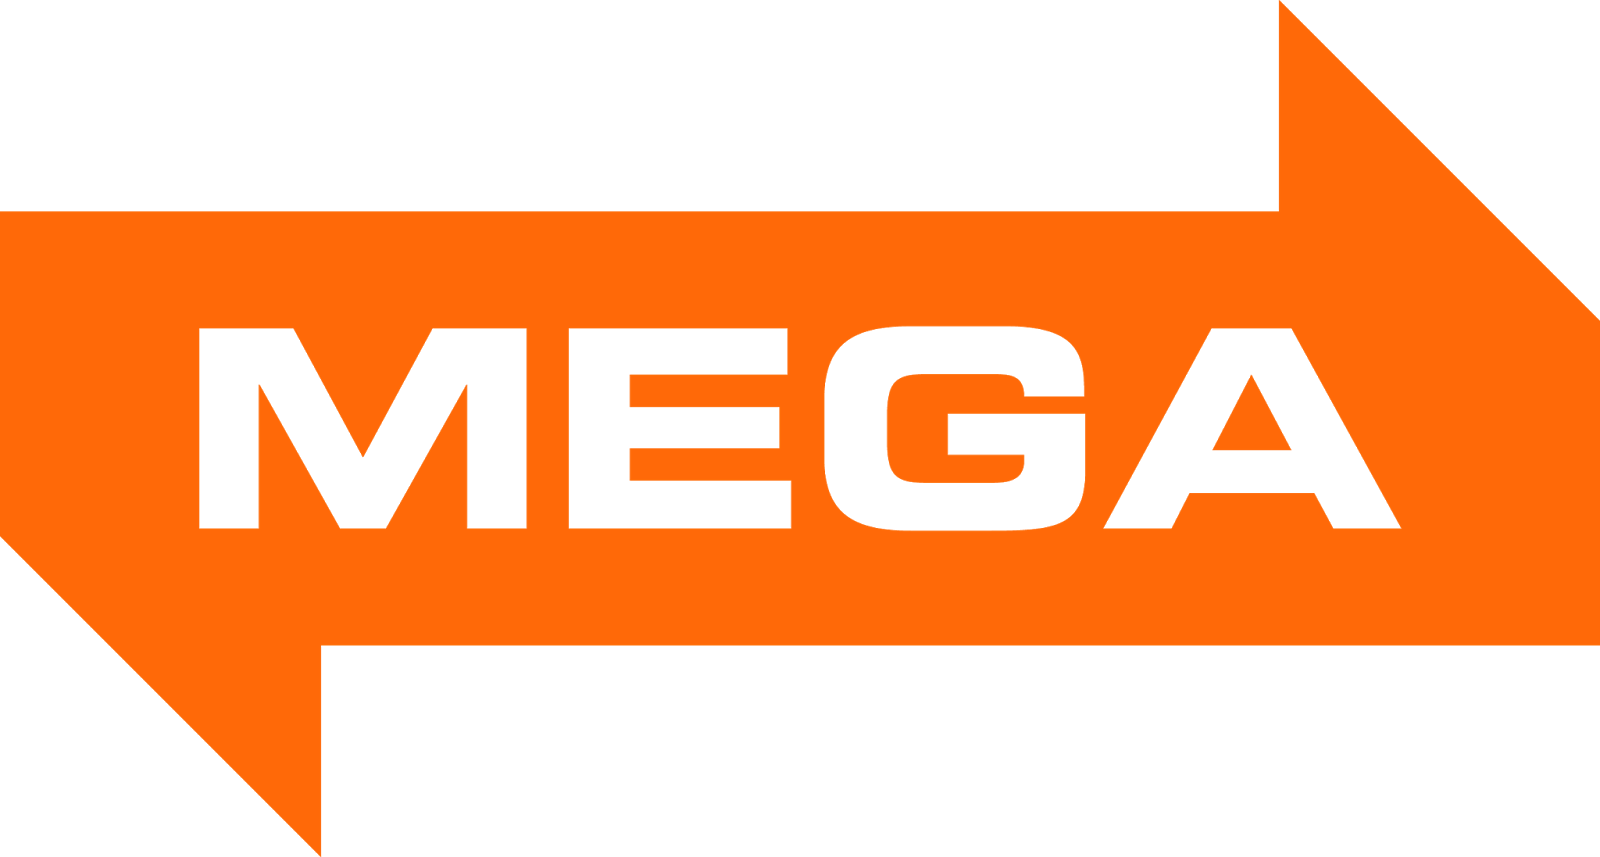 Www mega com. Mega. Mega иконка. Надпись Mega. Mega облачное хранилище логотип.